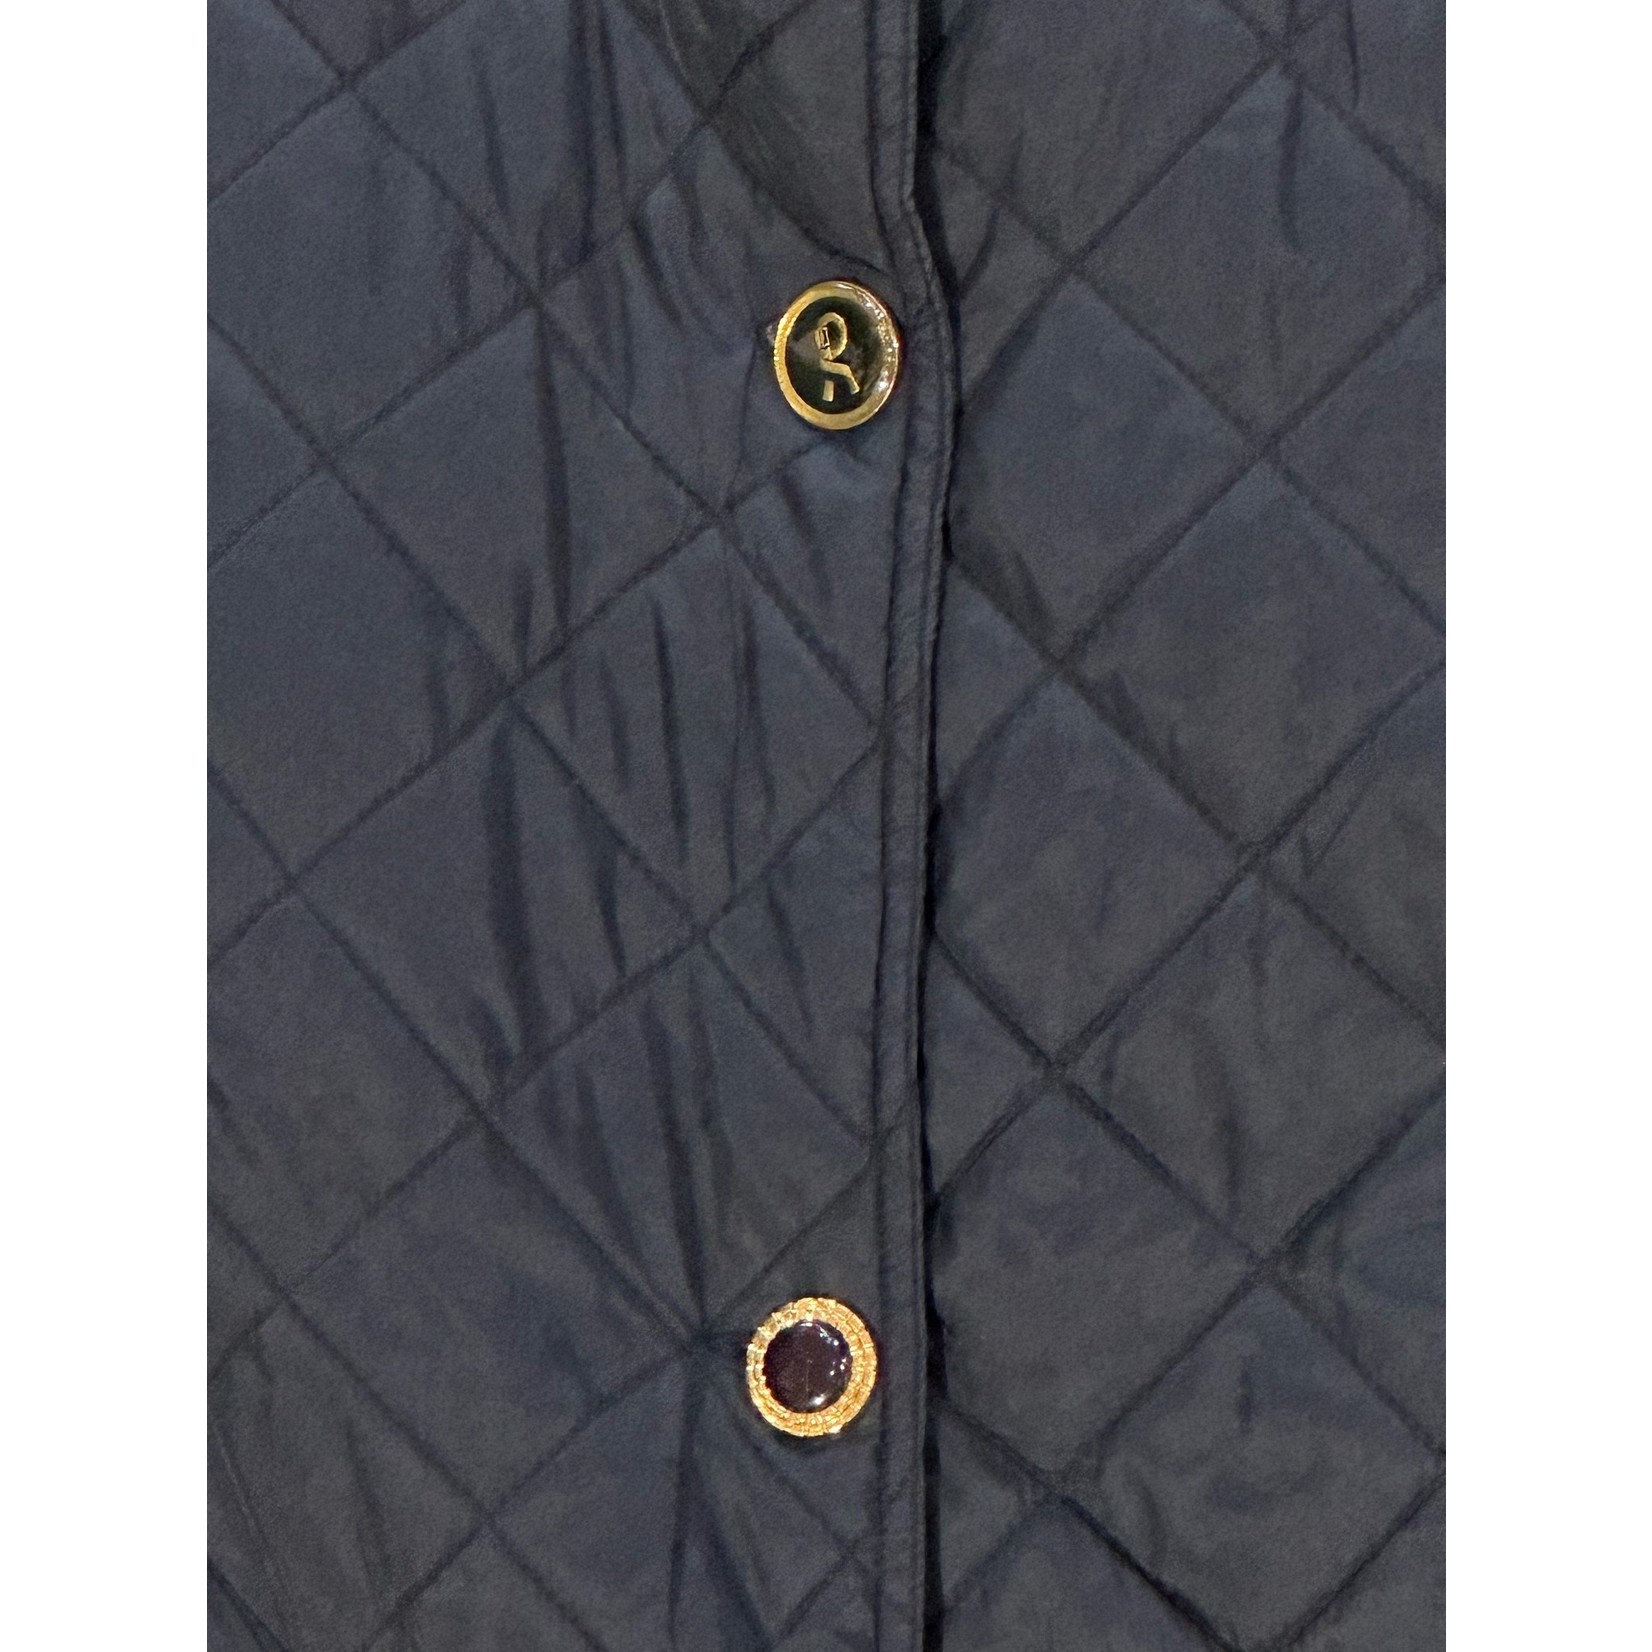 Vintage Vintage gewatteerde jas zwart size L